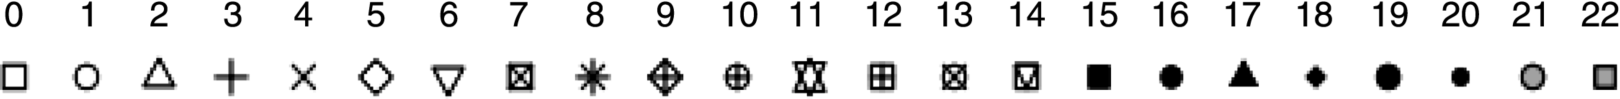 Figure depicting plotting symbols in R: pch=n, n =0, 1, 2, . . . , 25.